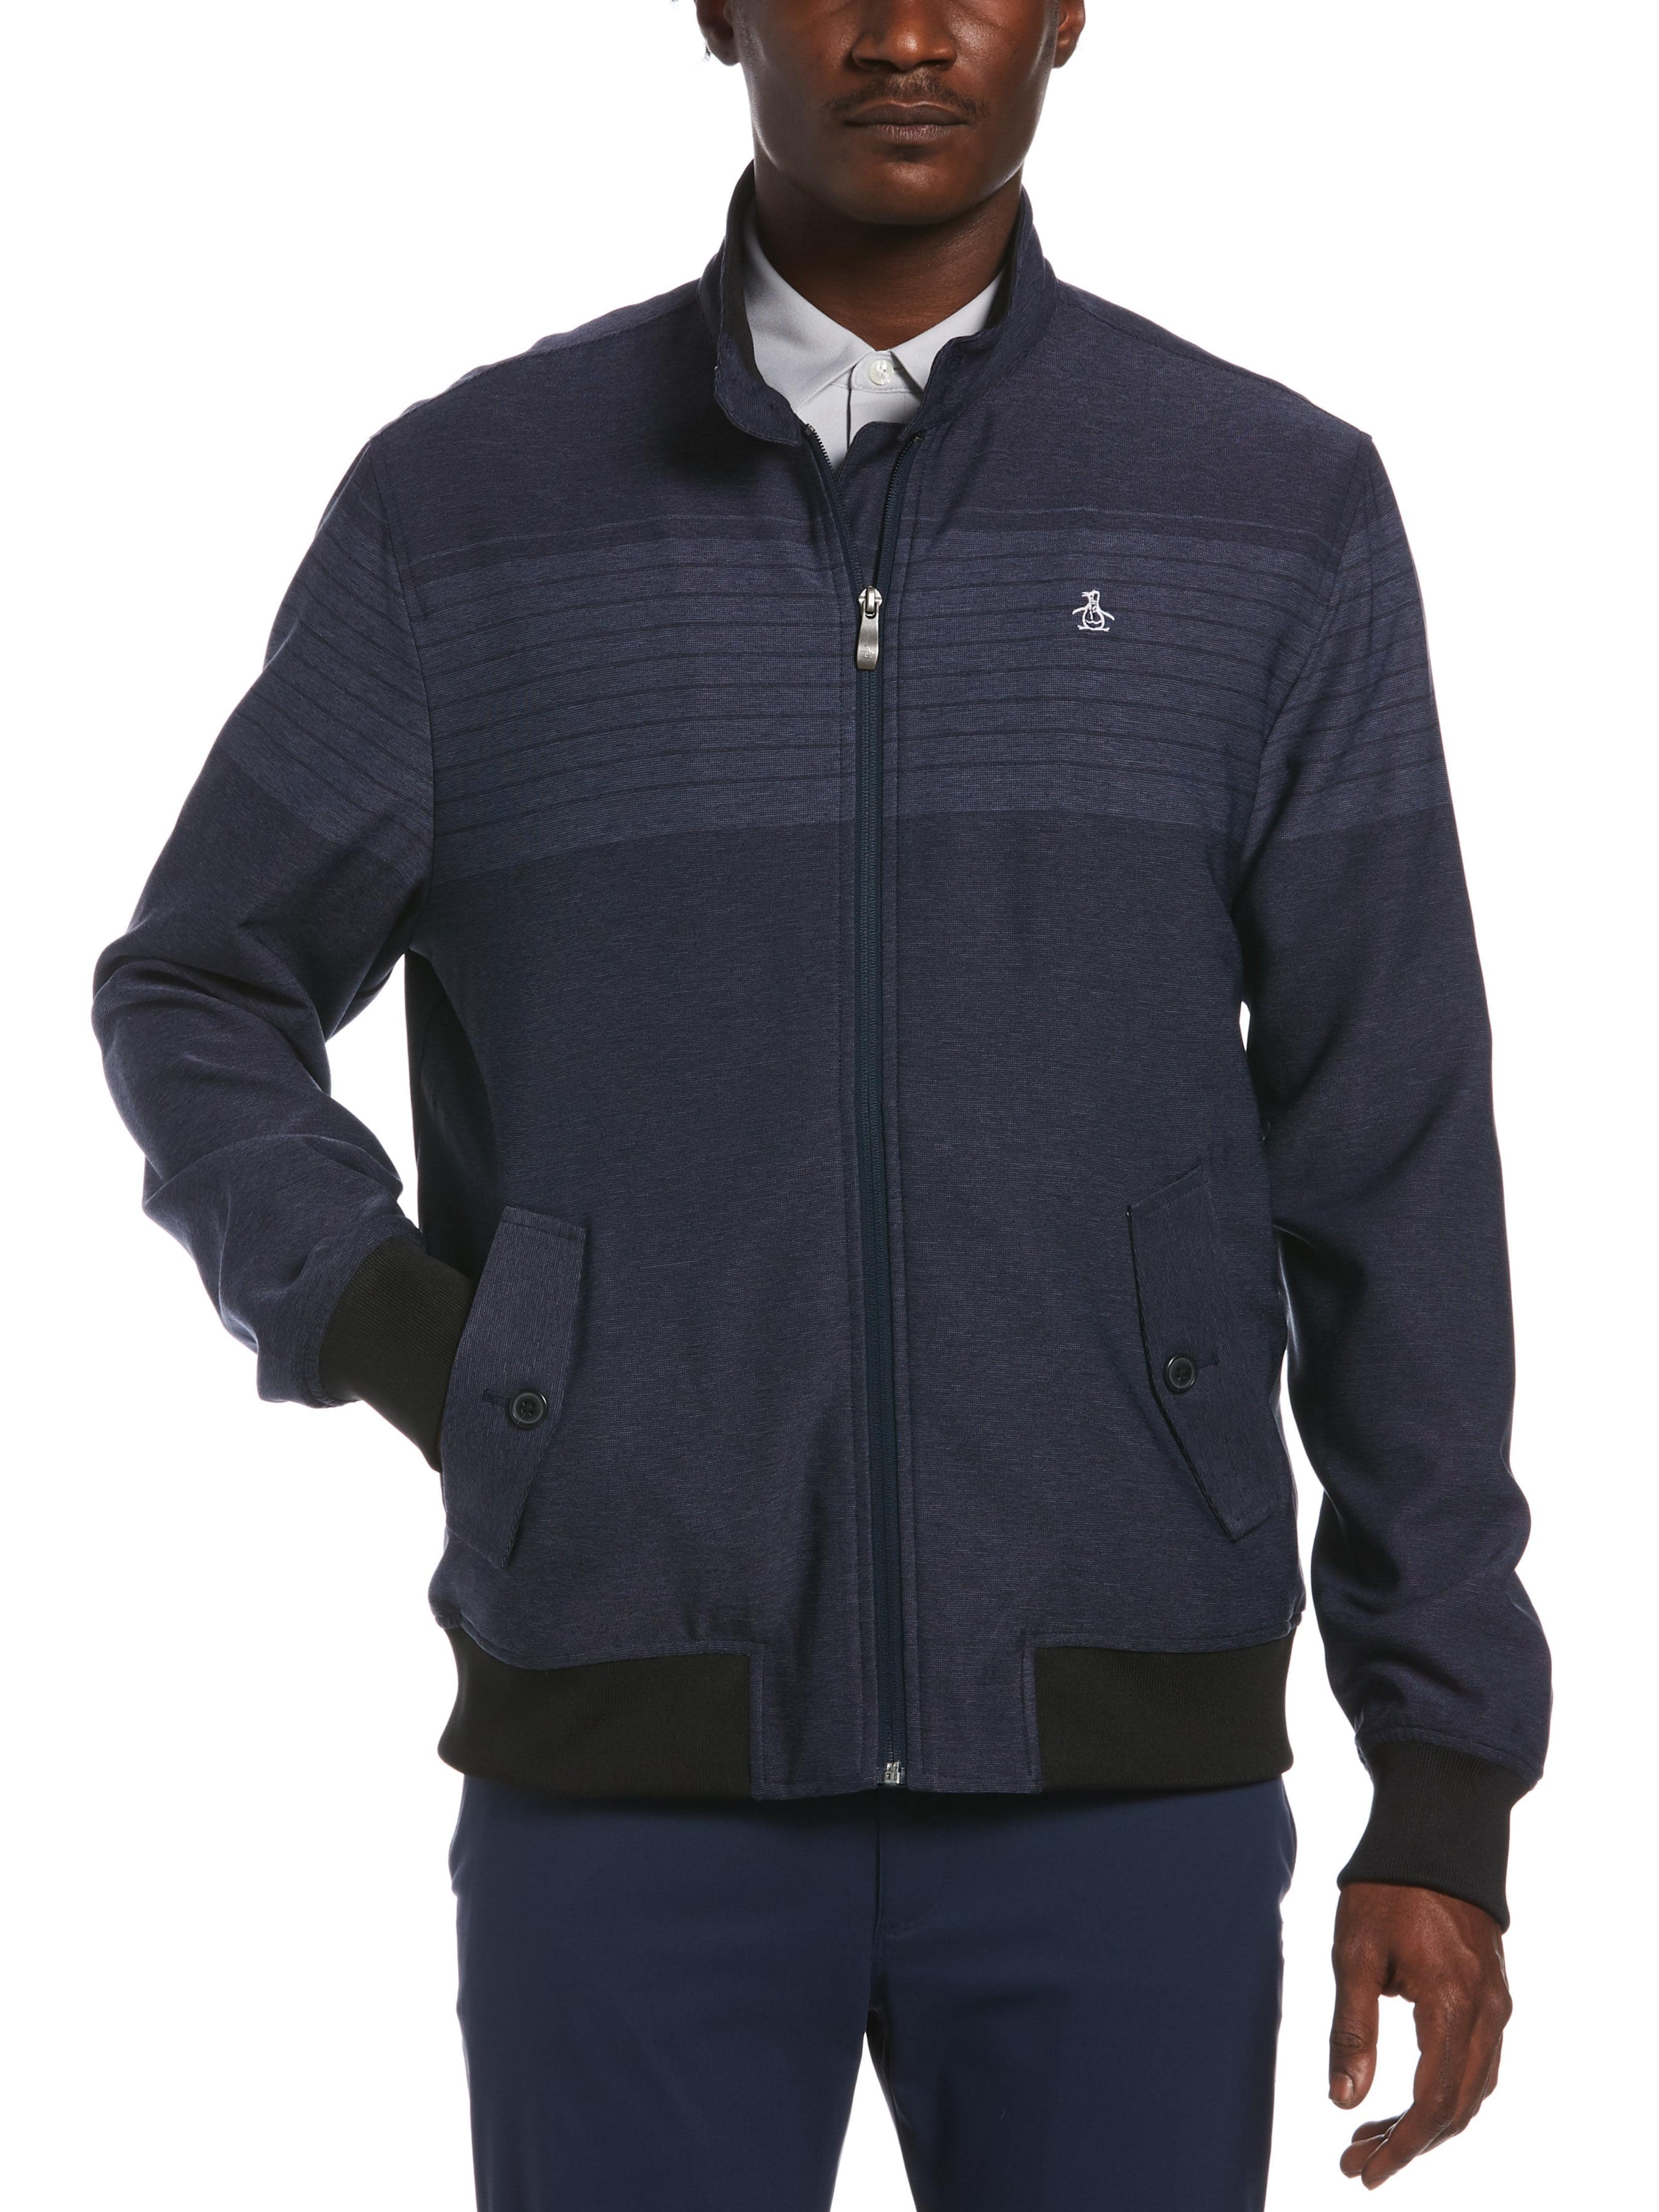 Original Penguin Mens Dobby Golf Jacket Top, Size XL, Black Iris Bijou Hthr Blue, Polyester/Elastane | Golf Apparel Shop